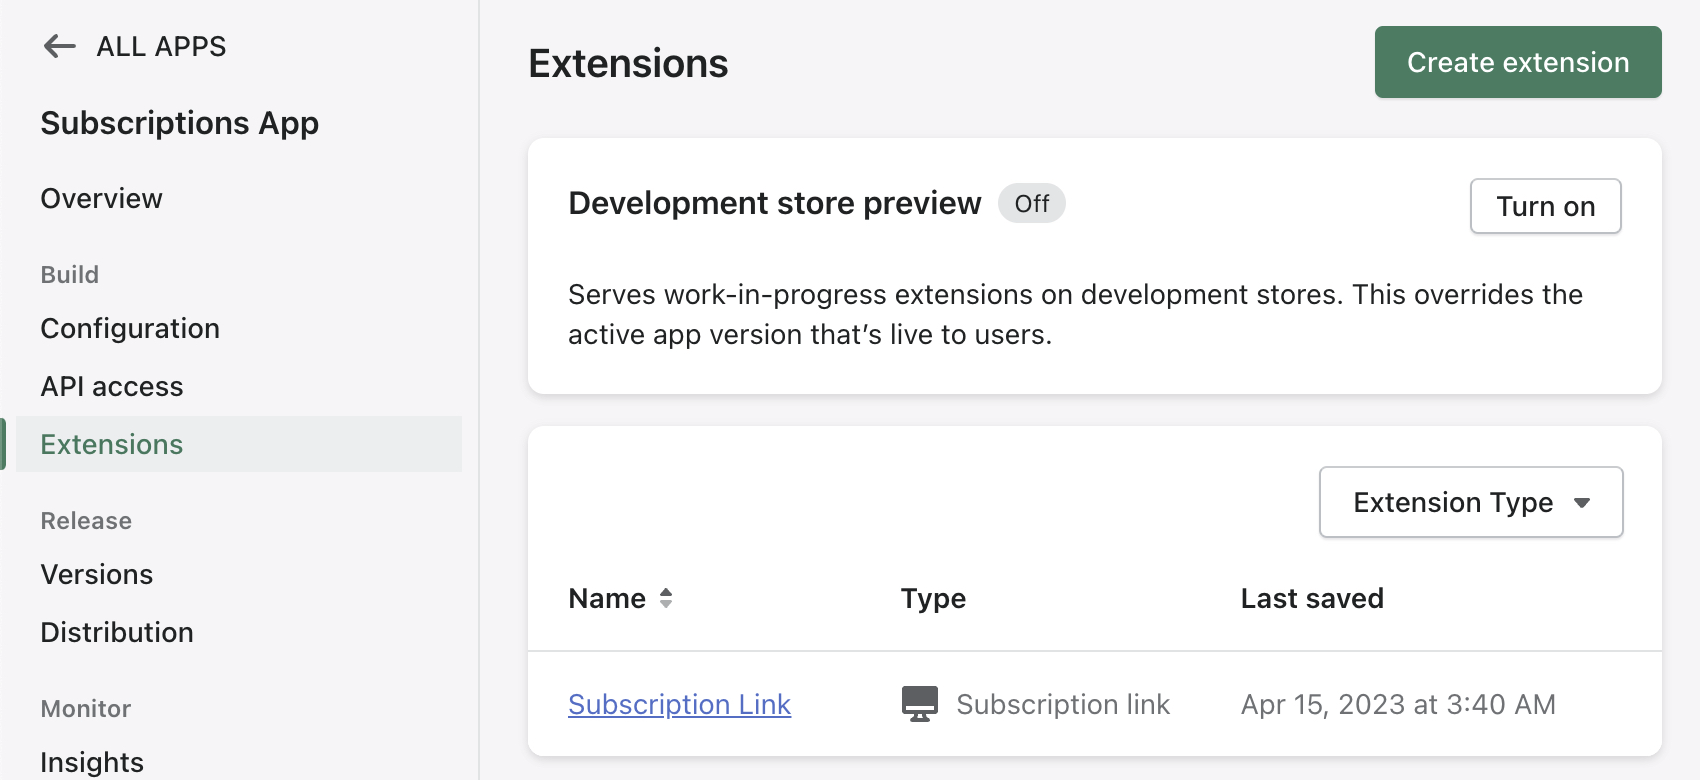 Subscription link app extension in Partner Dashboard